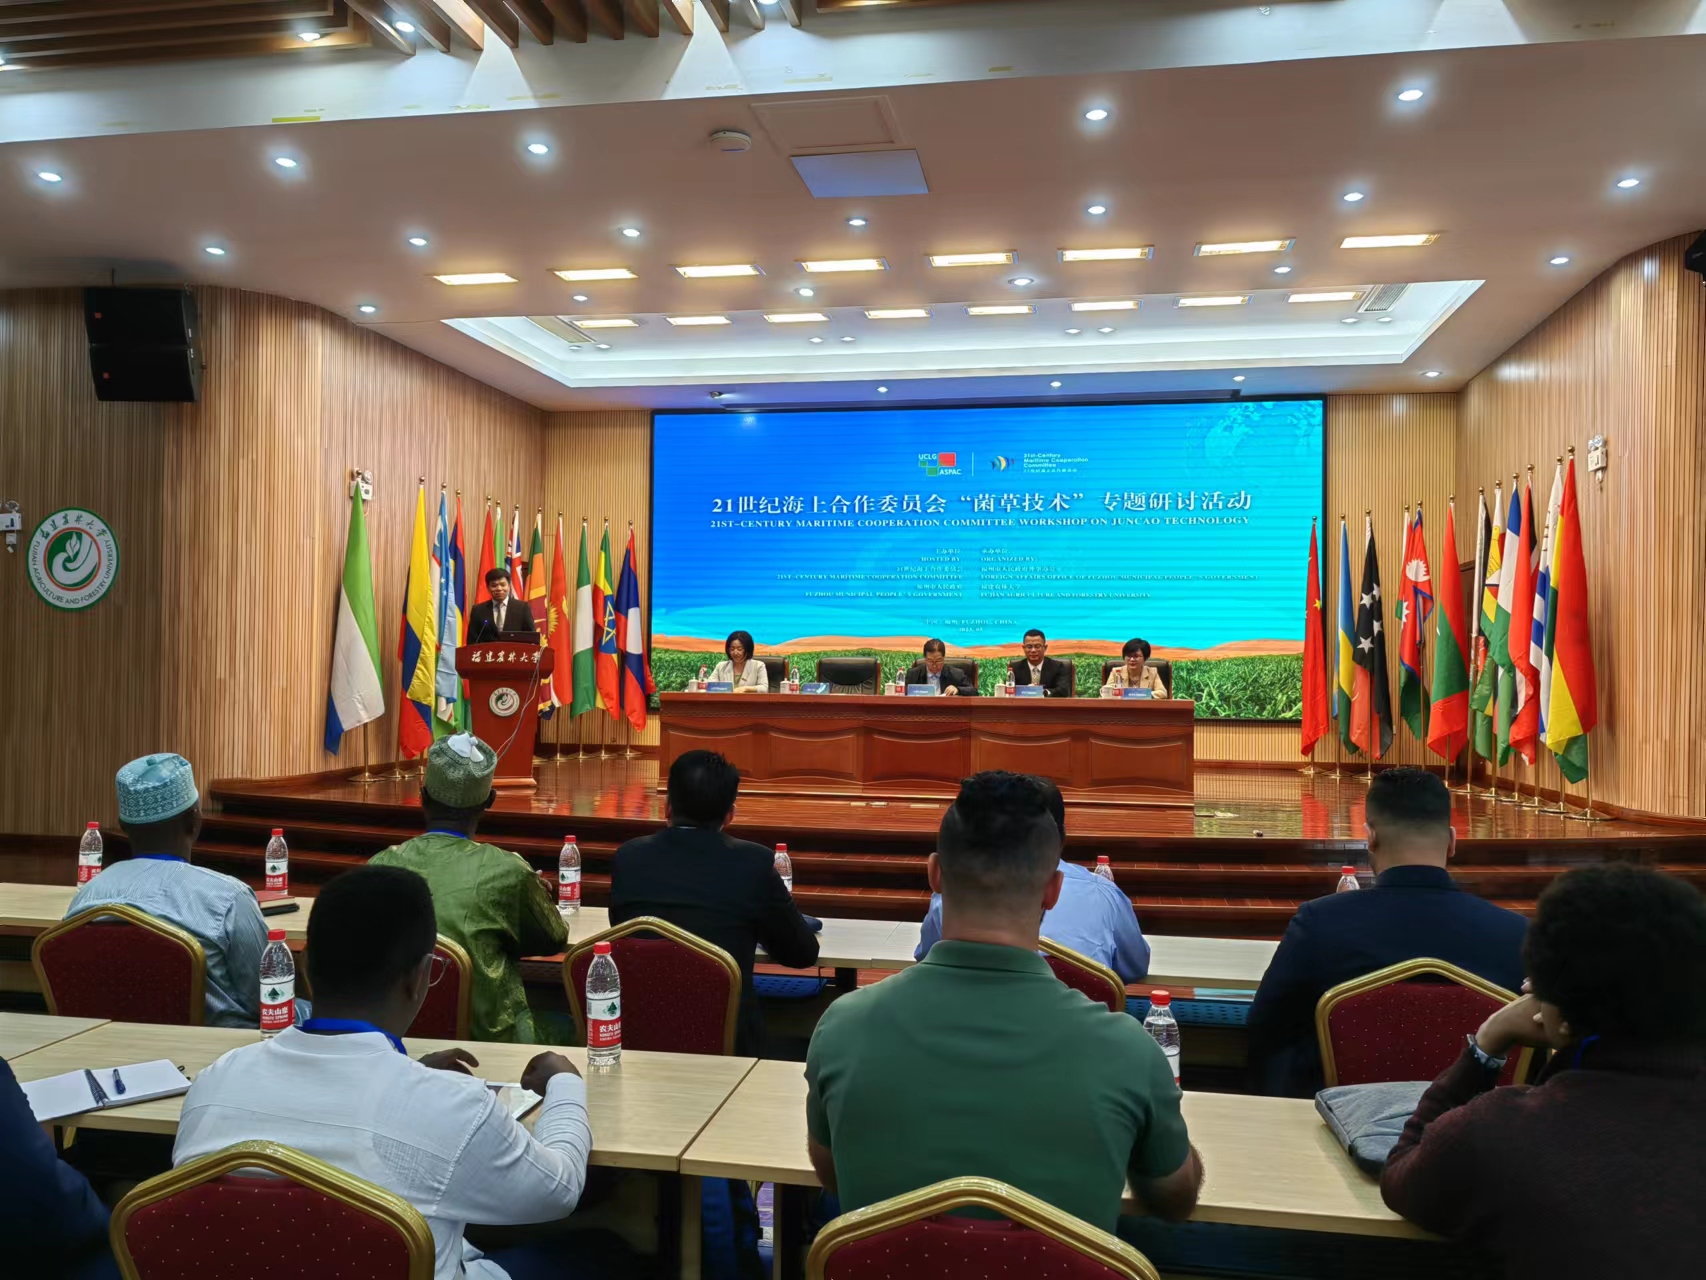 21st-Century Maritime Cooperation Committee Workshop on Juncao Technology Held in Fuzhou